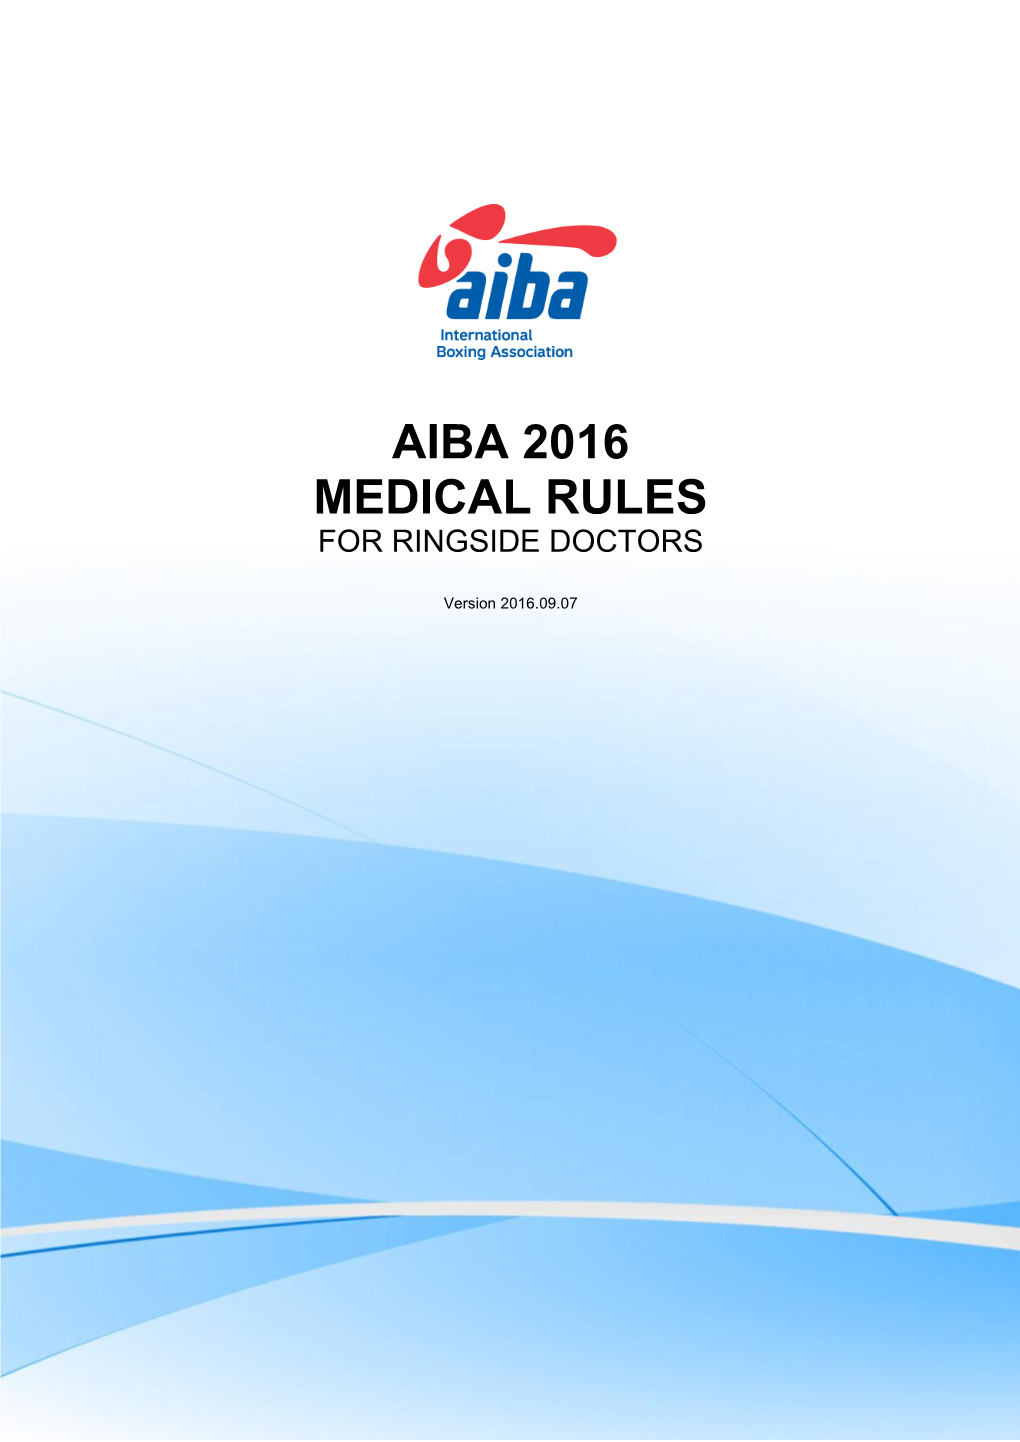 Aiba 2016 Medical Rules for Ringside Doctors